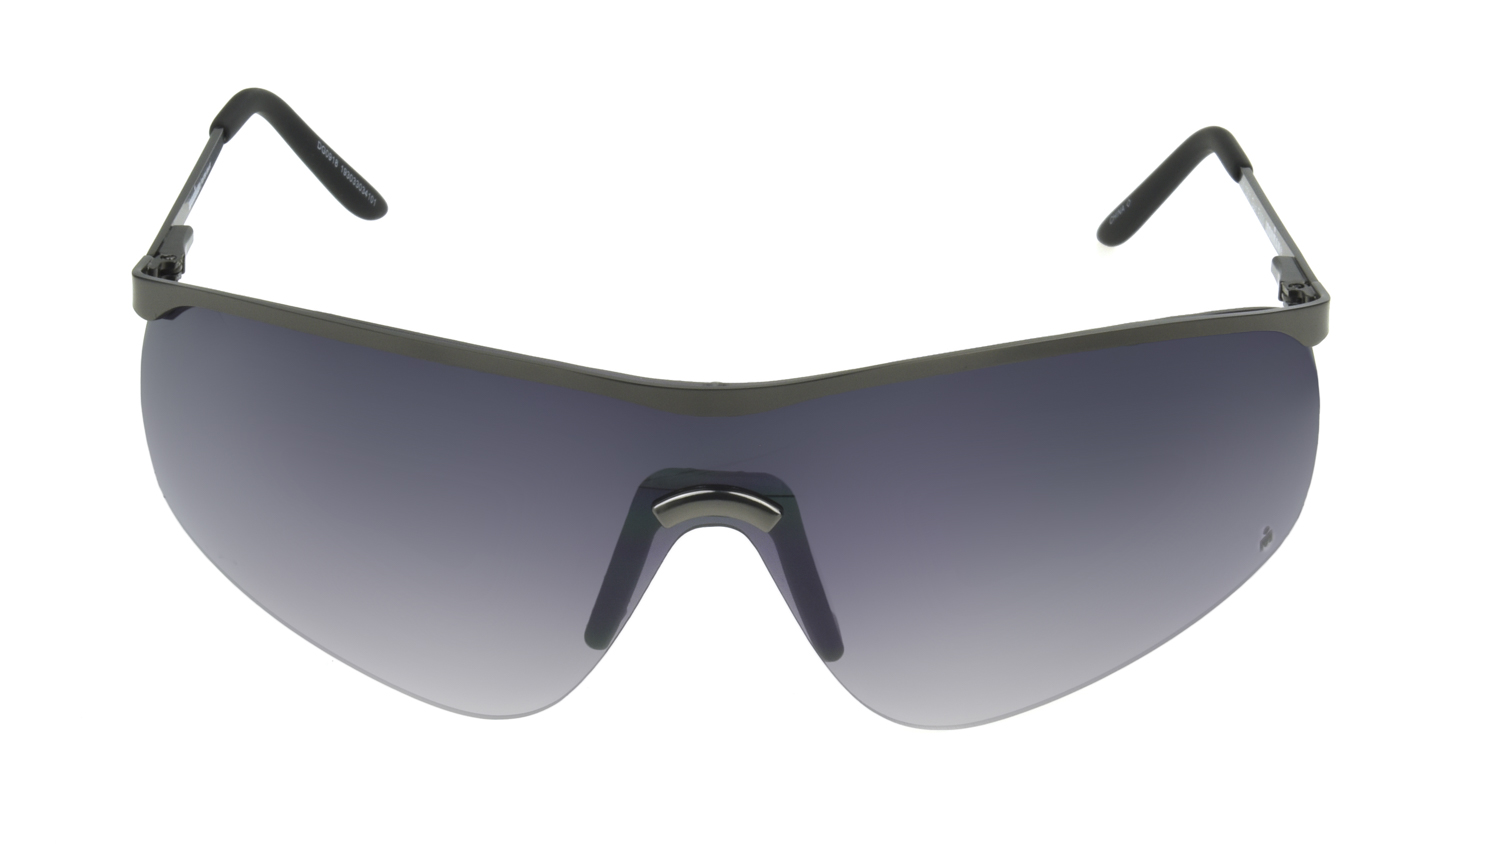 IRONMAN Men's Gunmetal Shield Sunglasses PP02 - image 1 of 3